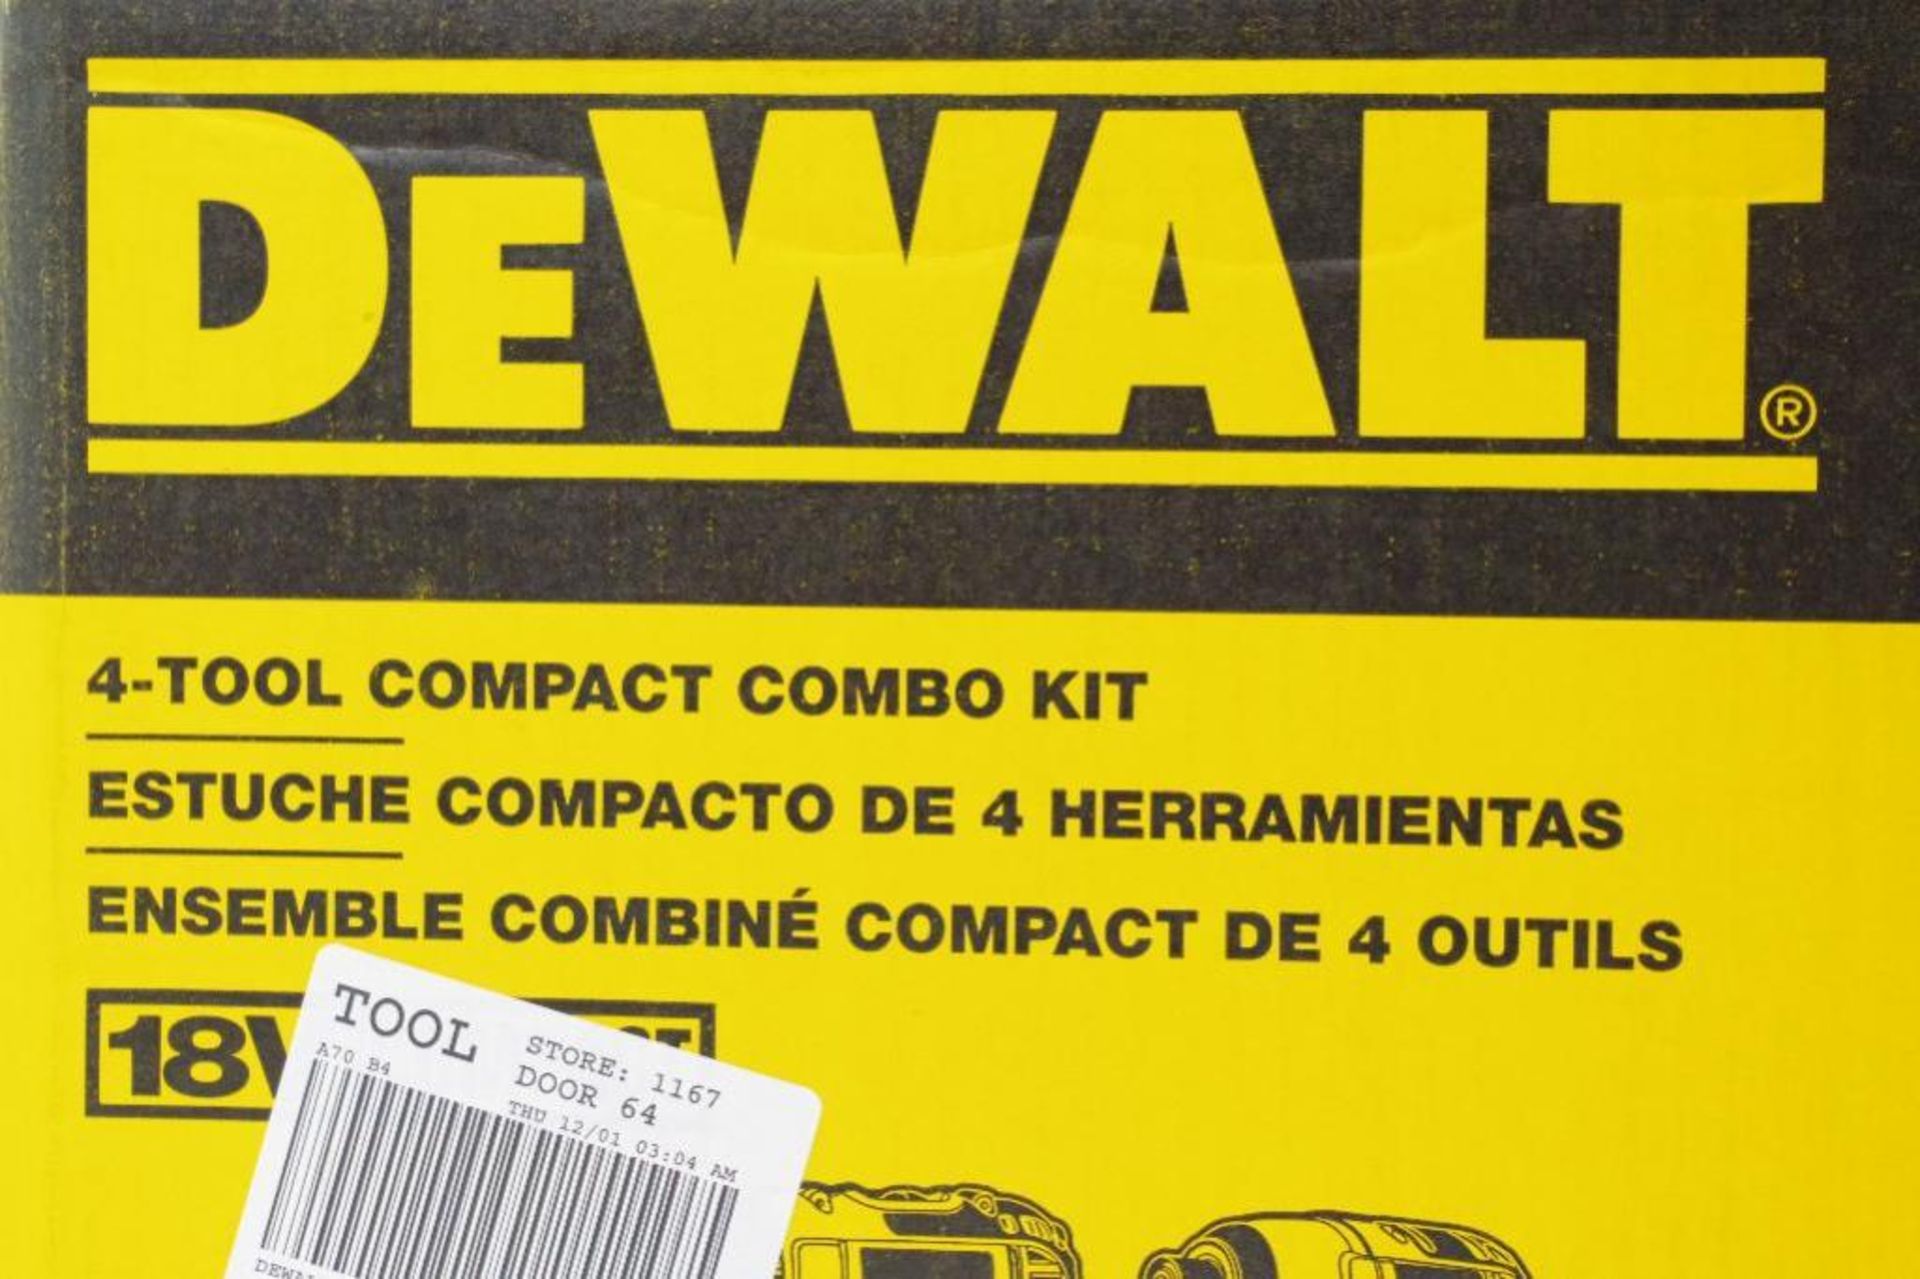 NEW DEWALT 18V 4-Tool Compact Combo Kit (see description) - Image 2 of 4